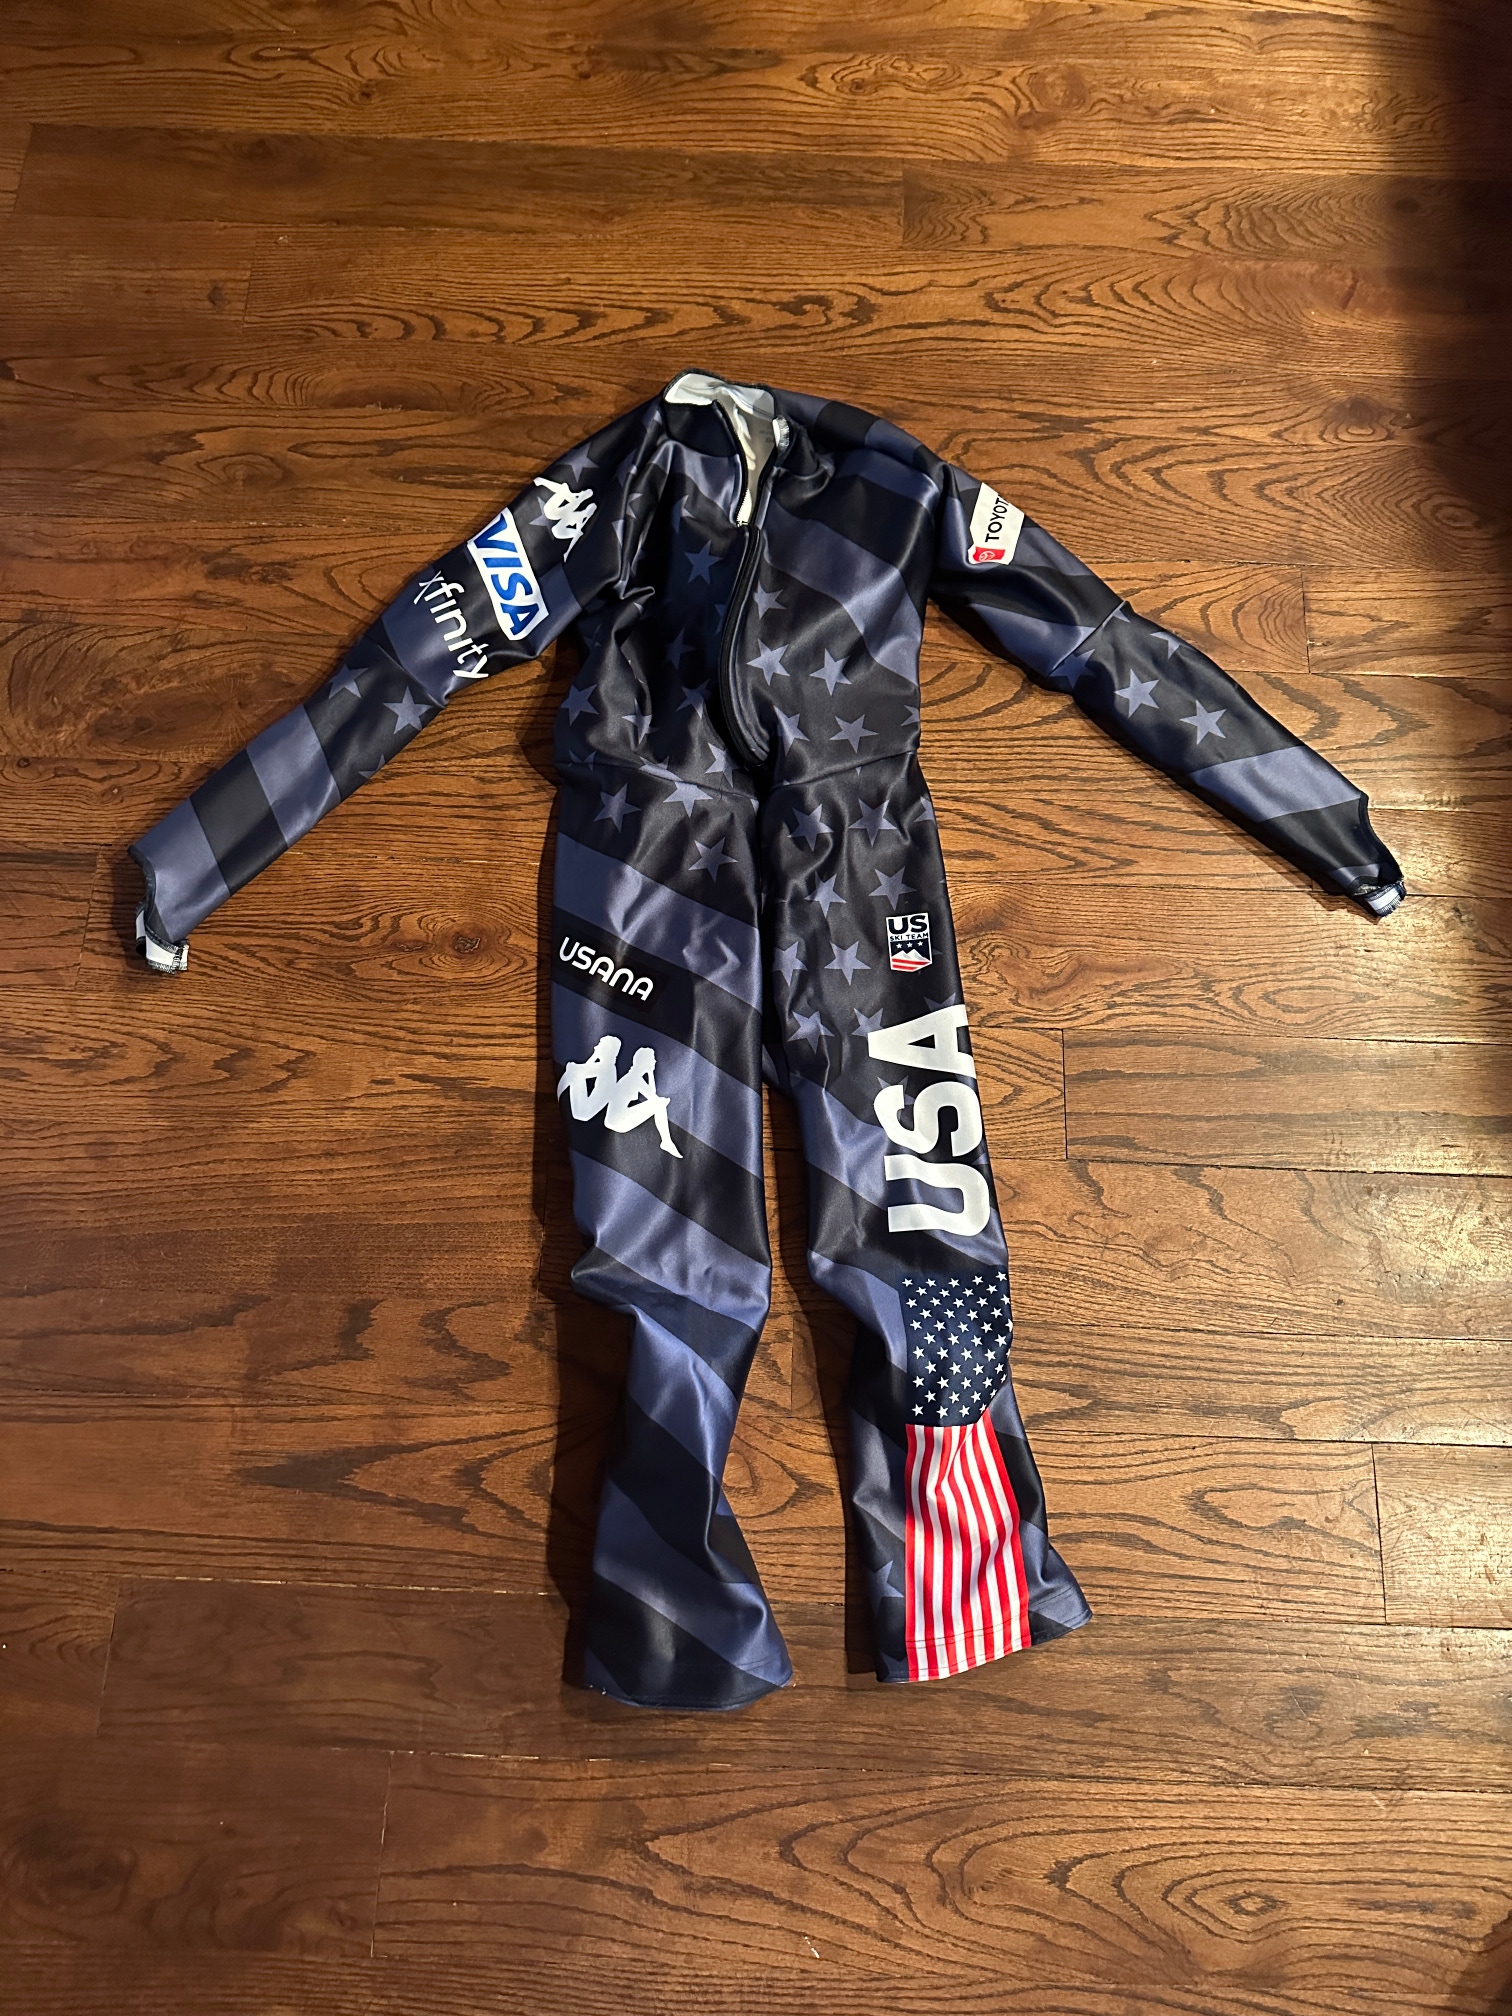 Unisex New 22-23 US Ski Suit FIS Legal